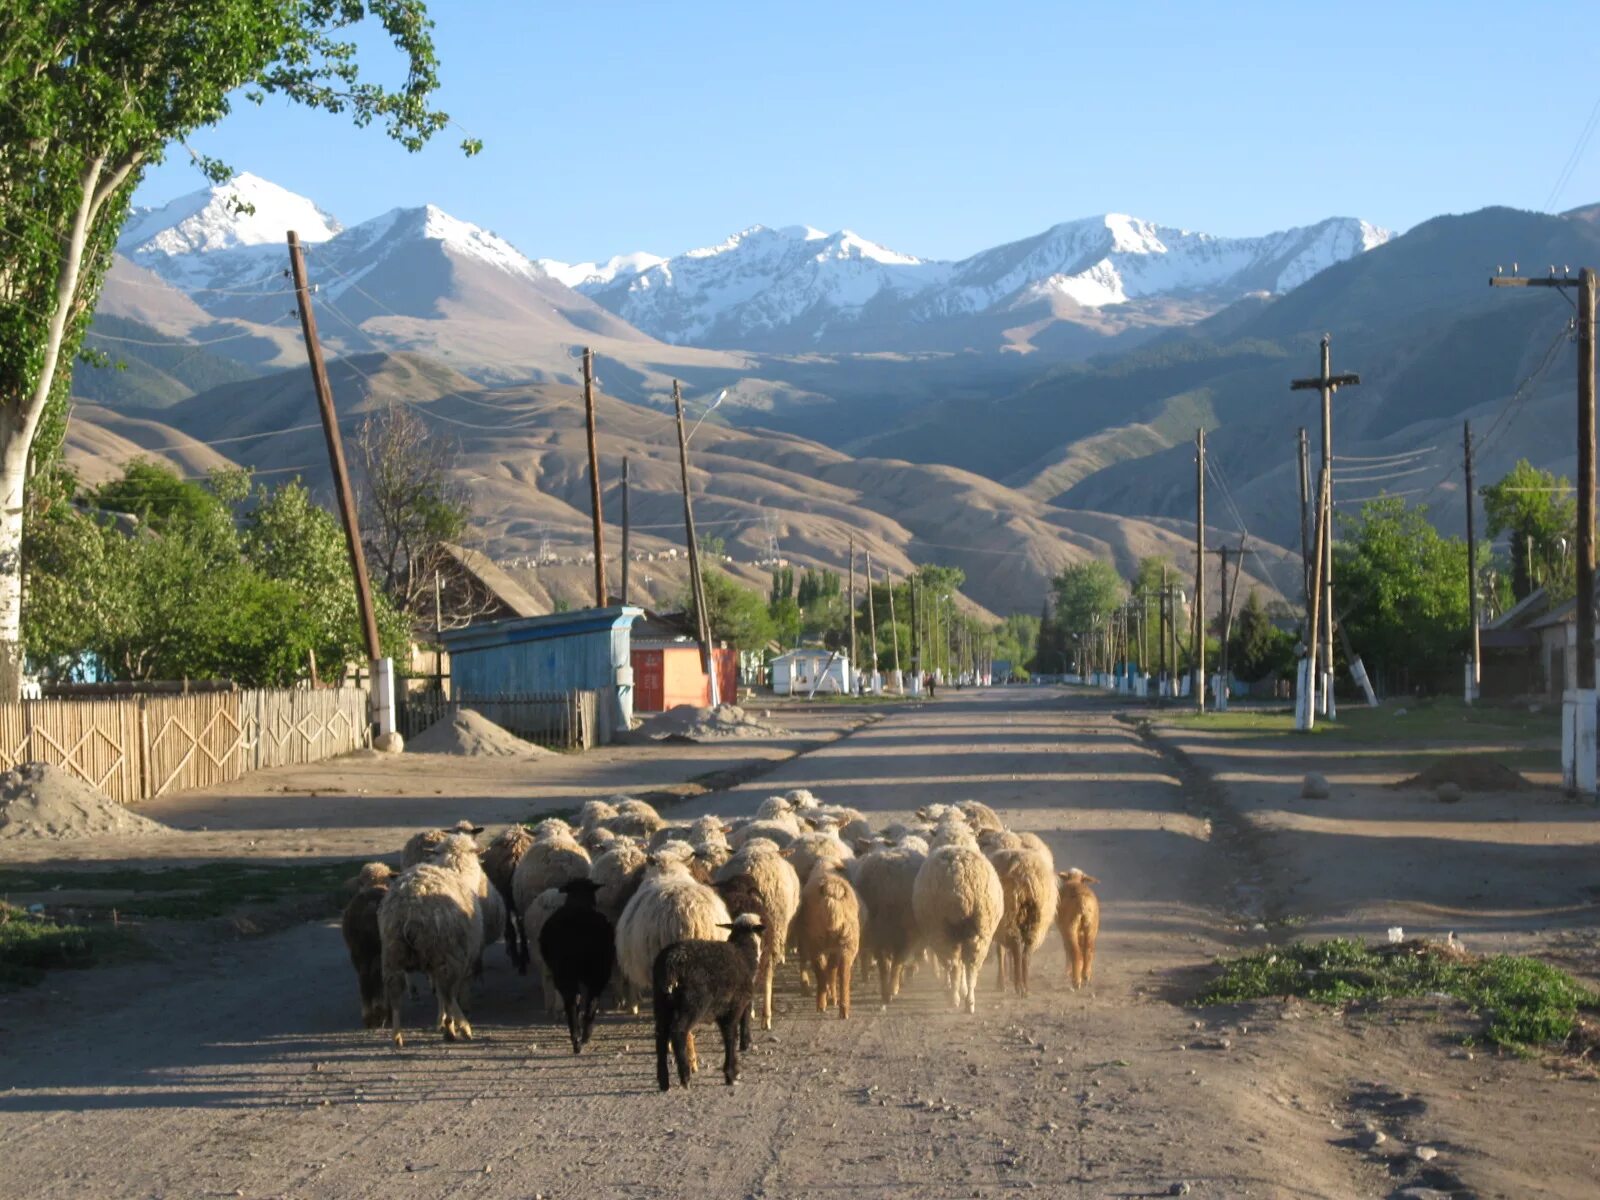 Поселки киргизии. Село тамга Иссык-Куль. Село Кочкорка Киргизия. Село Барскоон Киргизия. Село Шекер Киргизия.